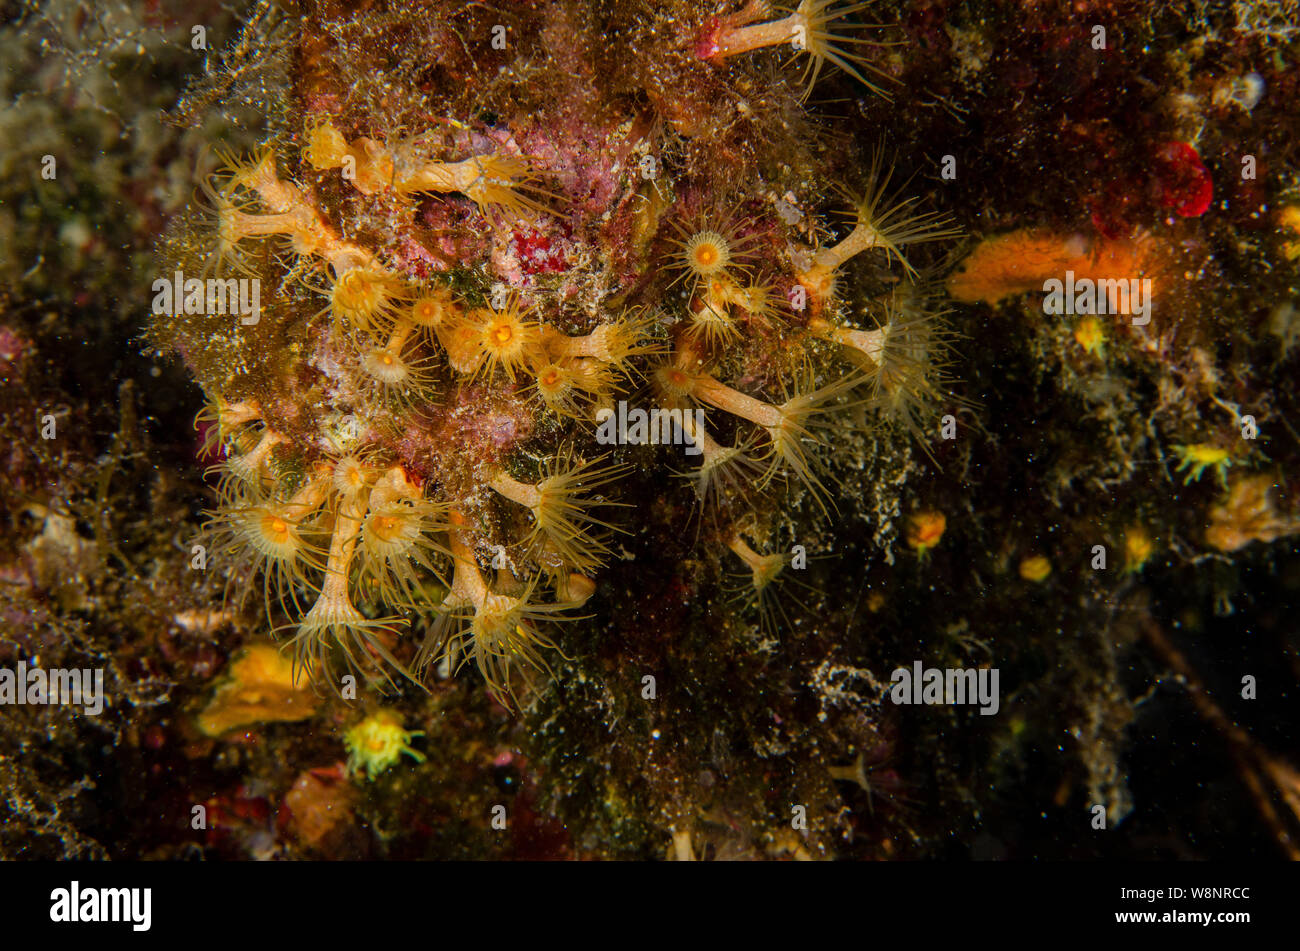 Cluster Ellow anemone, Parazoanthus axinellae, Parazoanthidae, Tor Paterno Area Marina Protetta, Roma, Italia, Mare Mediterraneo Foto Stock